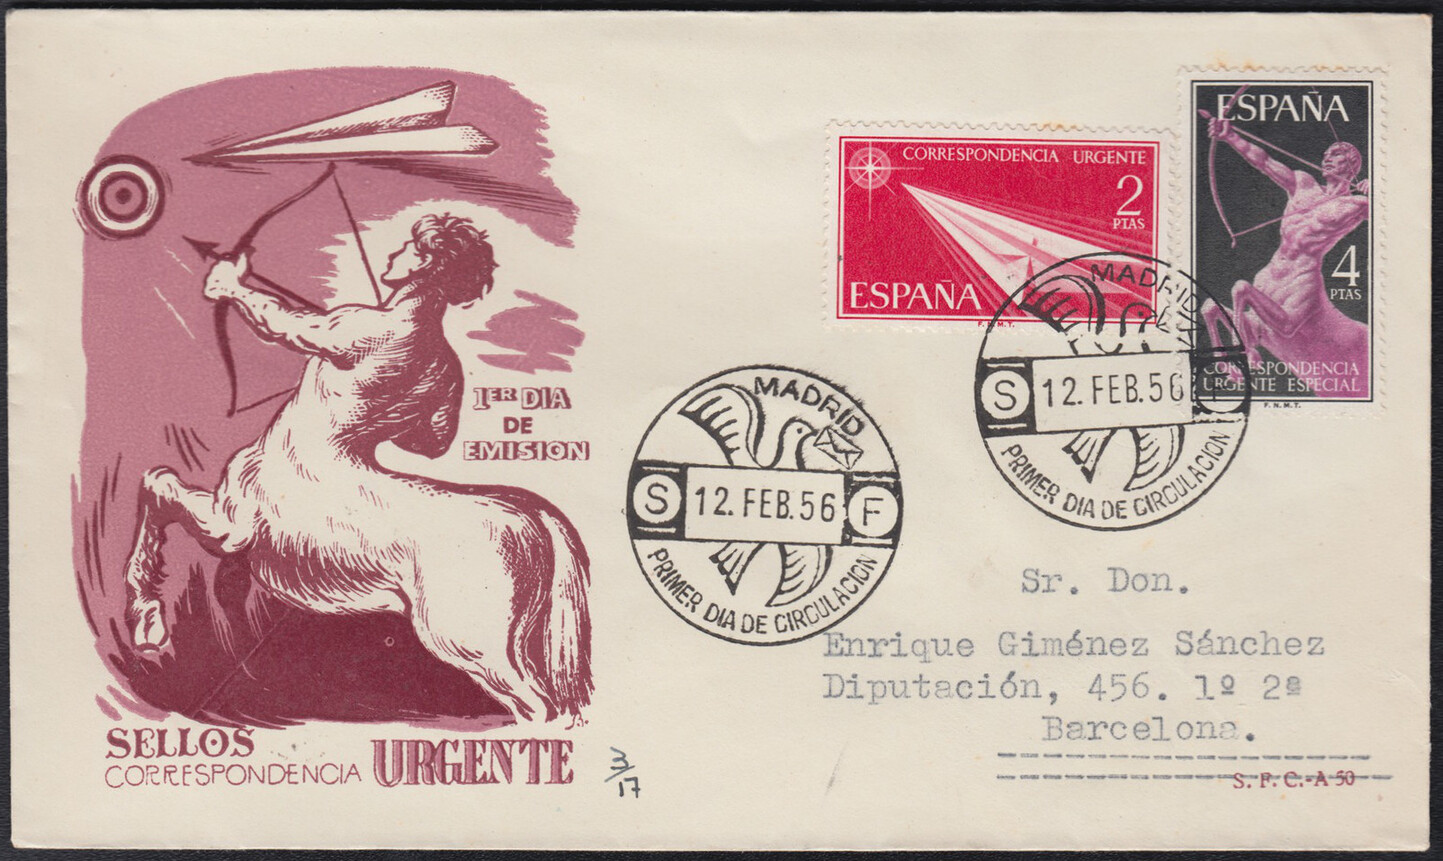 Spain 1956 Correspondencia Urgente - dart (2p) (FDC)